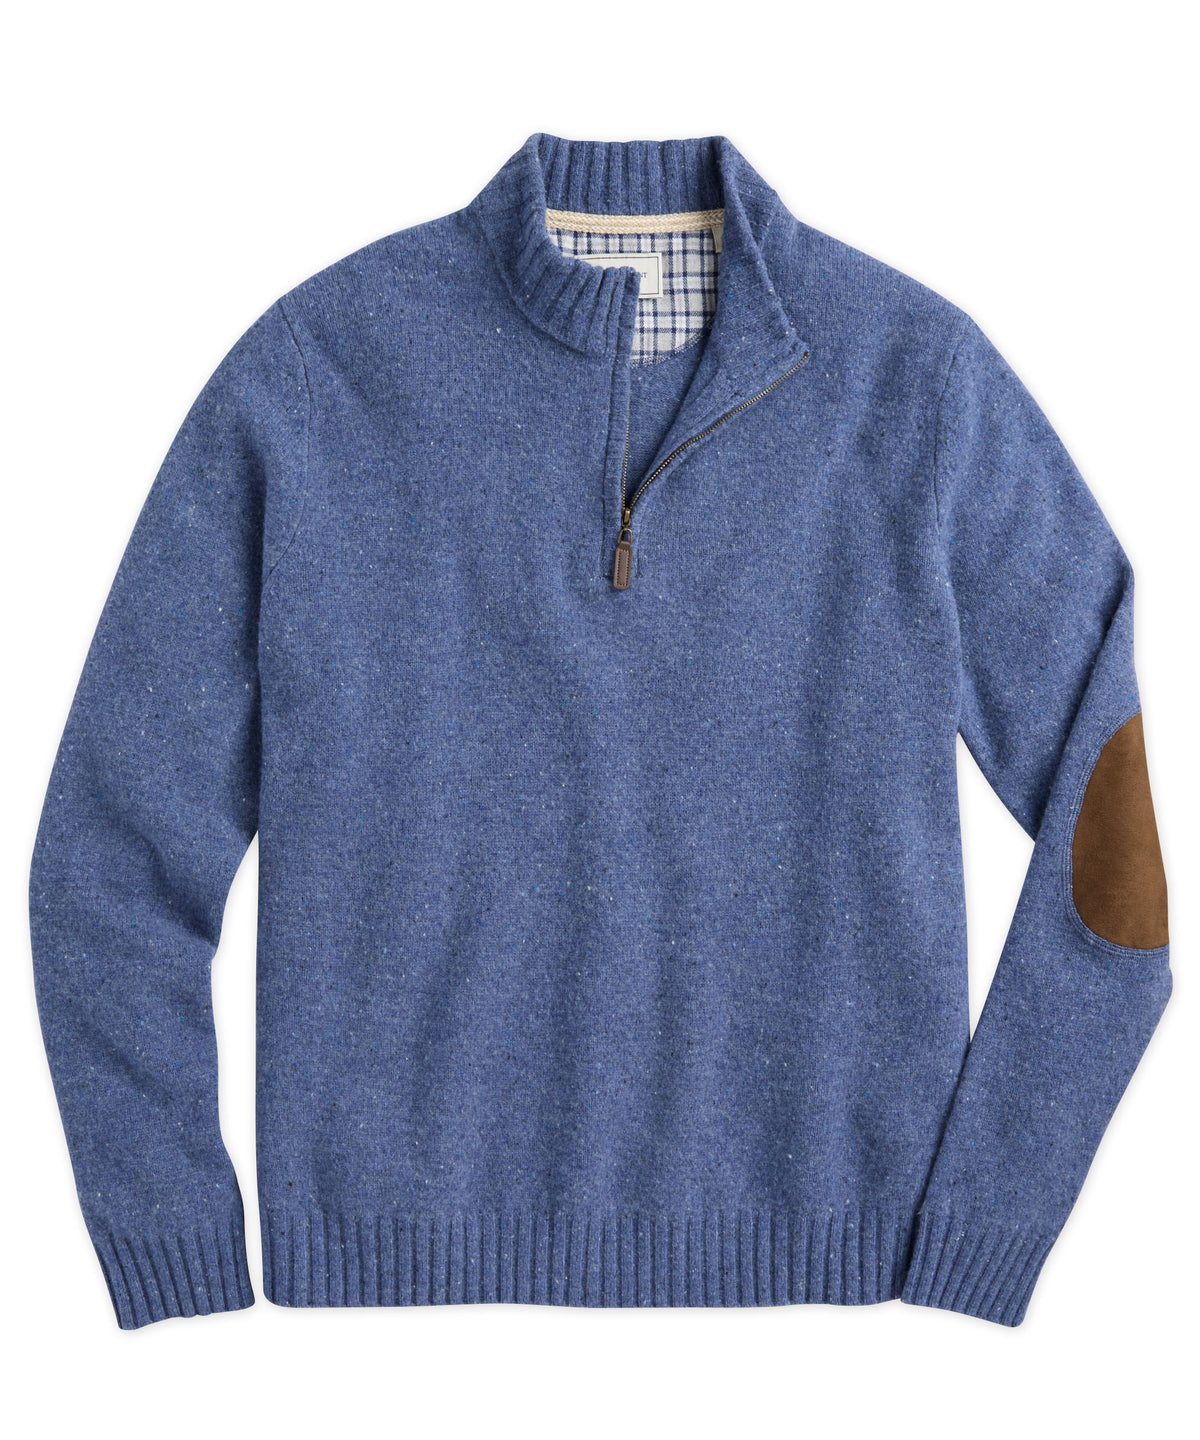 Donegal Quarter-Zip Sweater